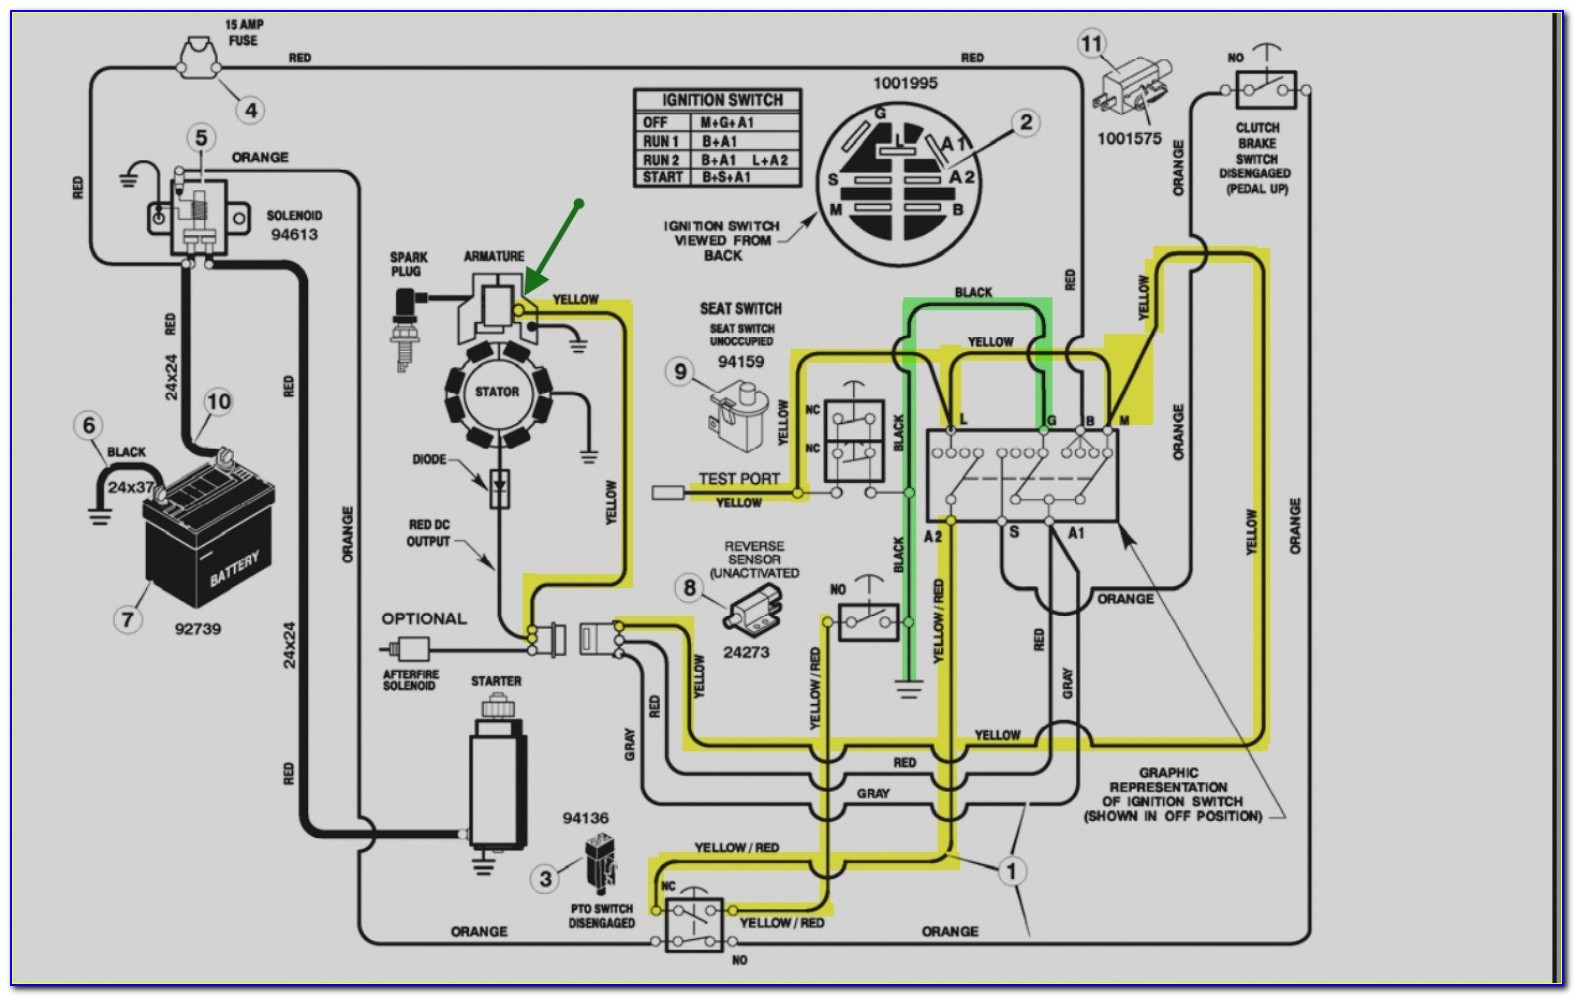 20 Hp Briggs And Stratton Engine Governor Diagram